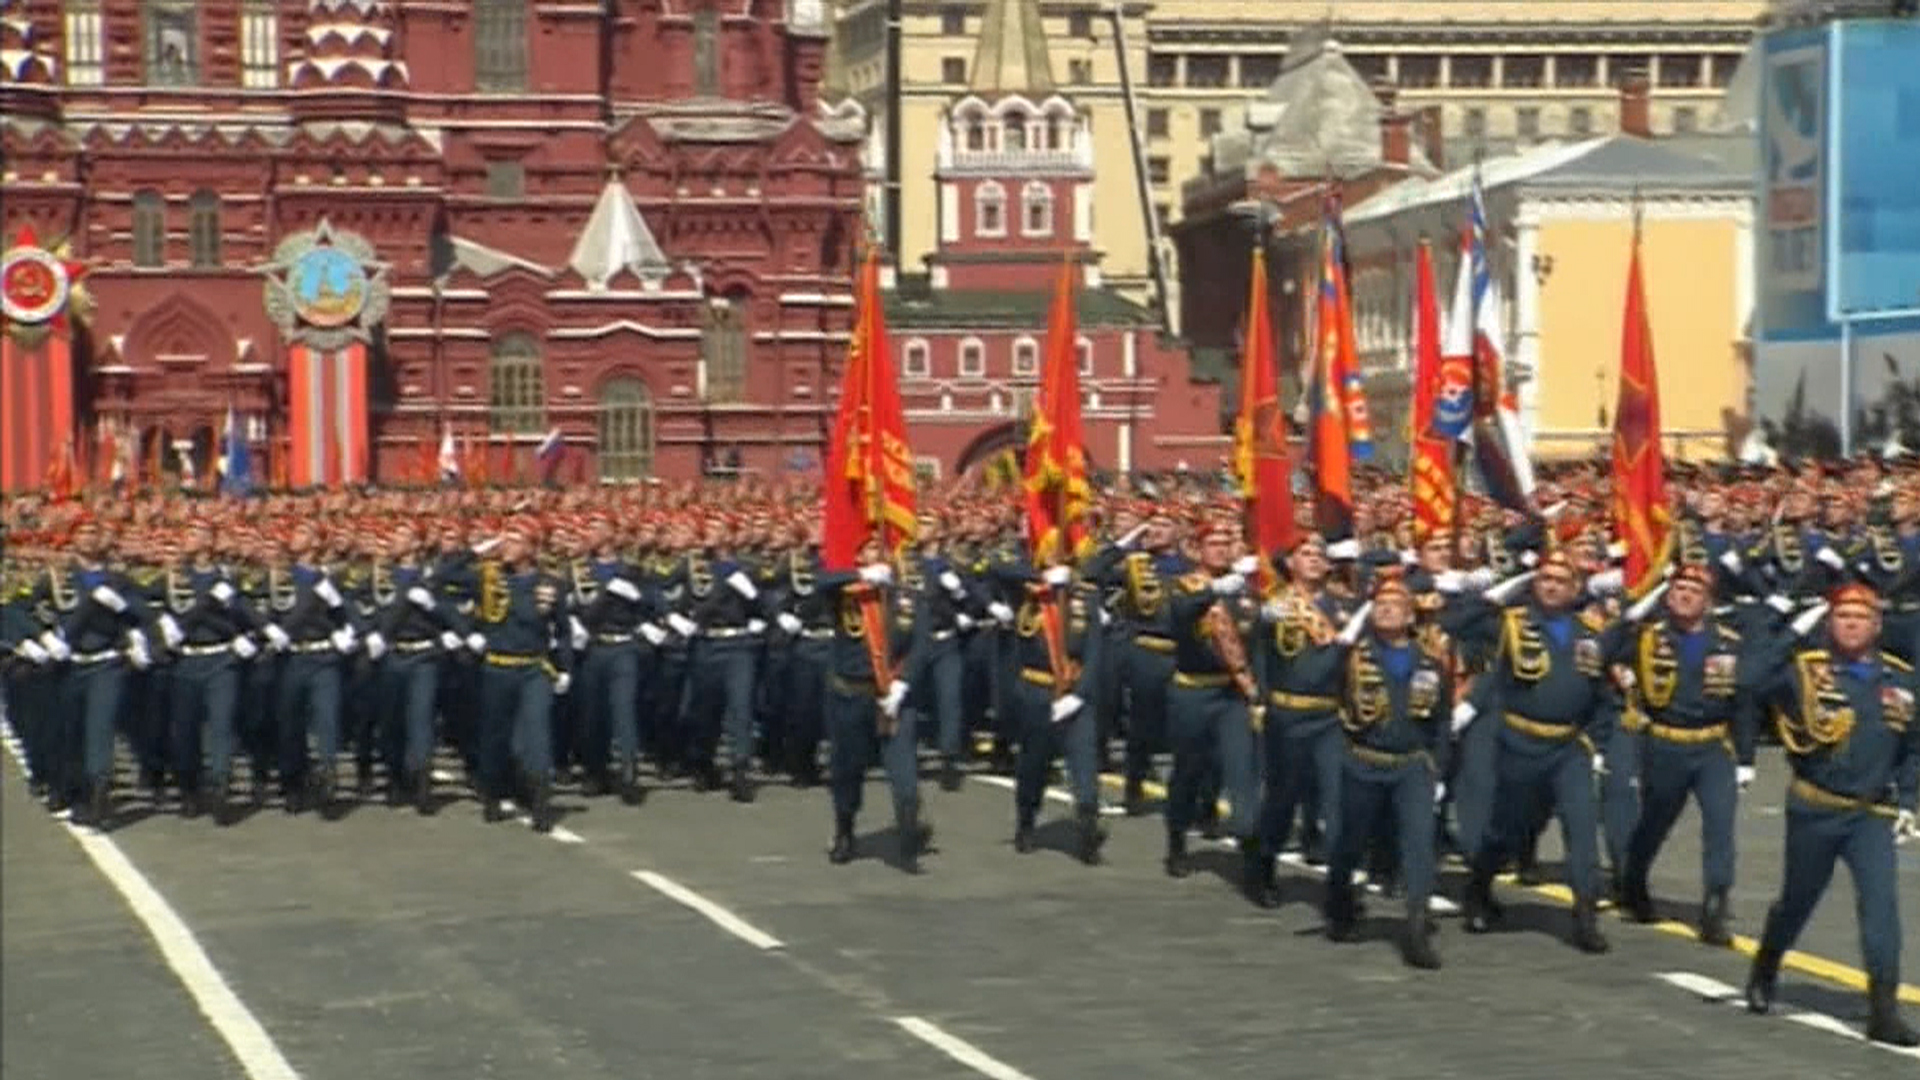 Russians show off military might during V-E Day parade - TODAY.com